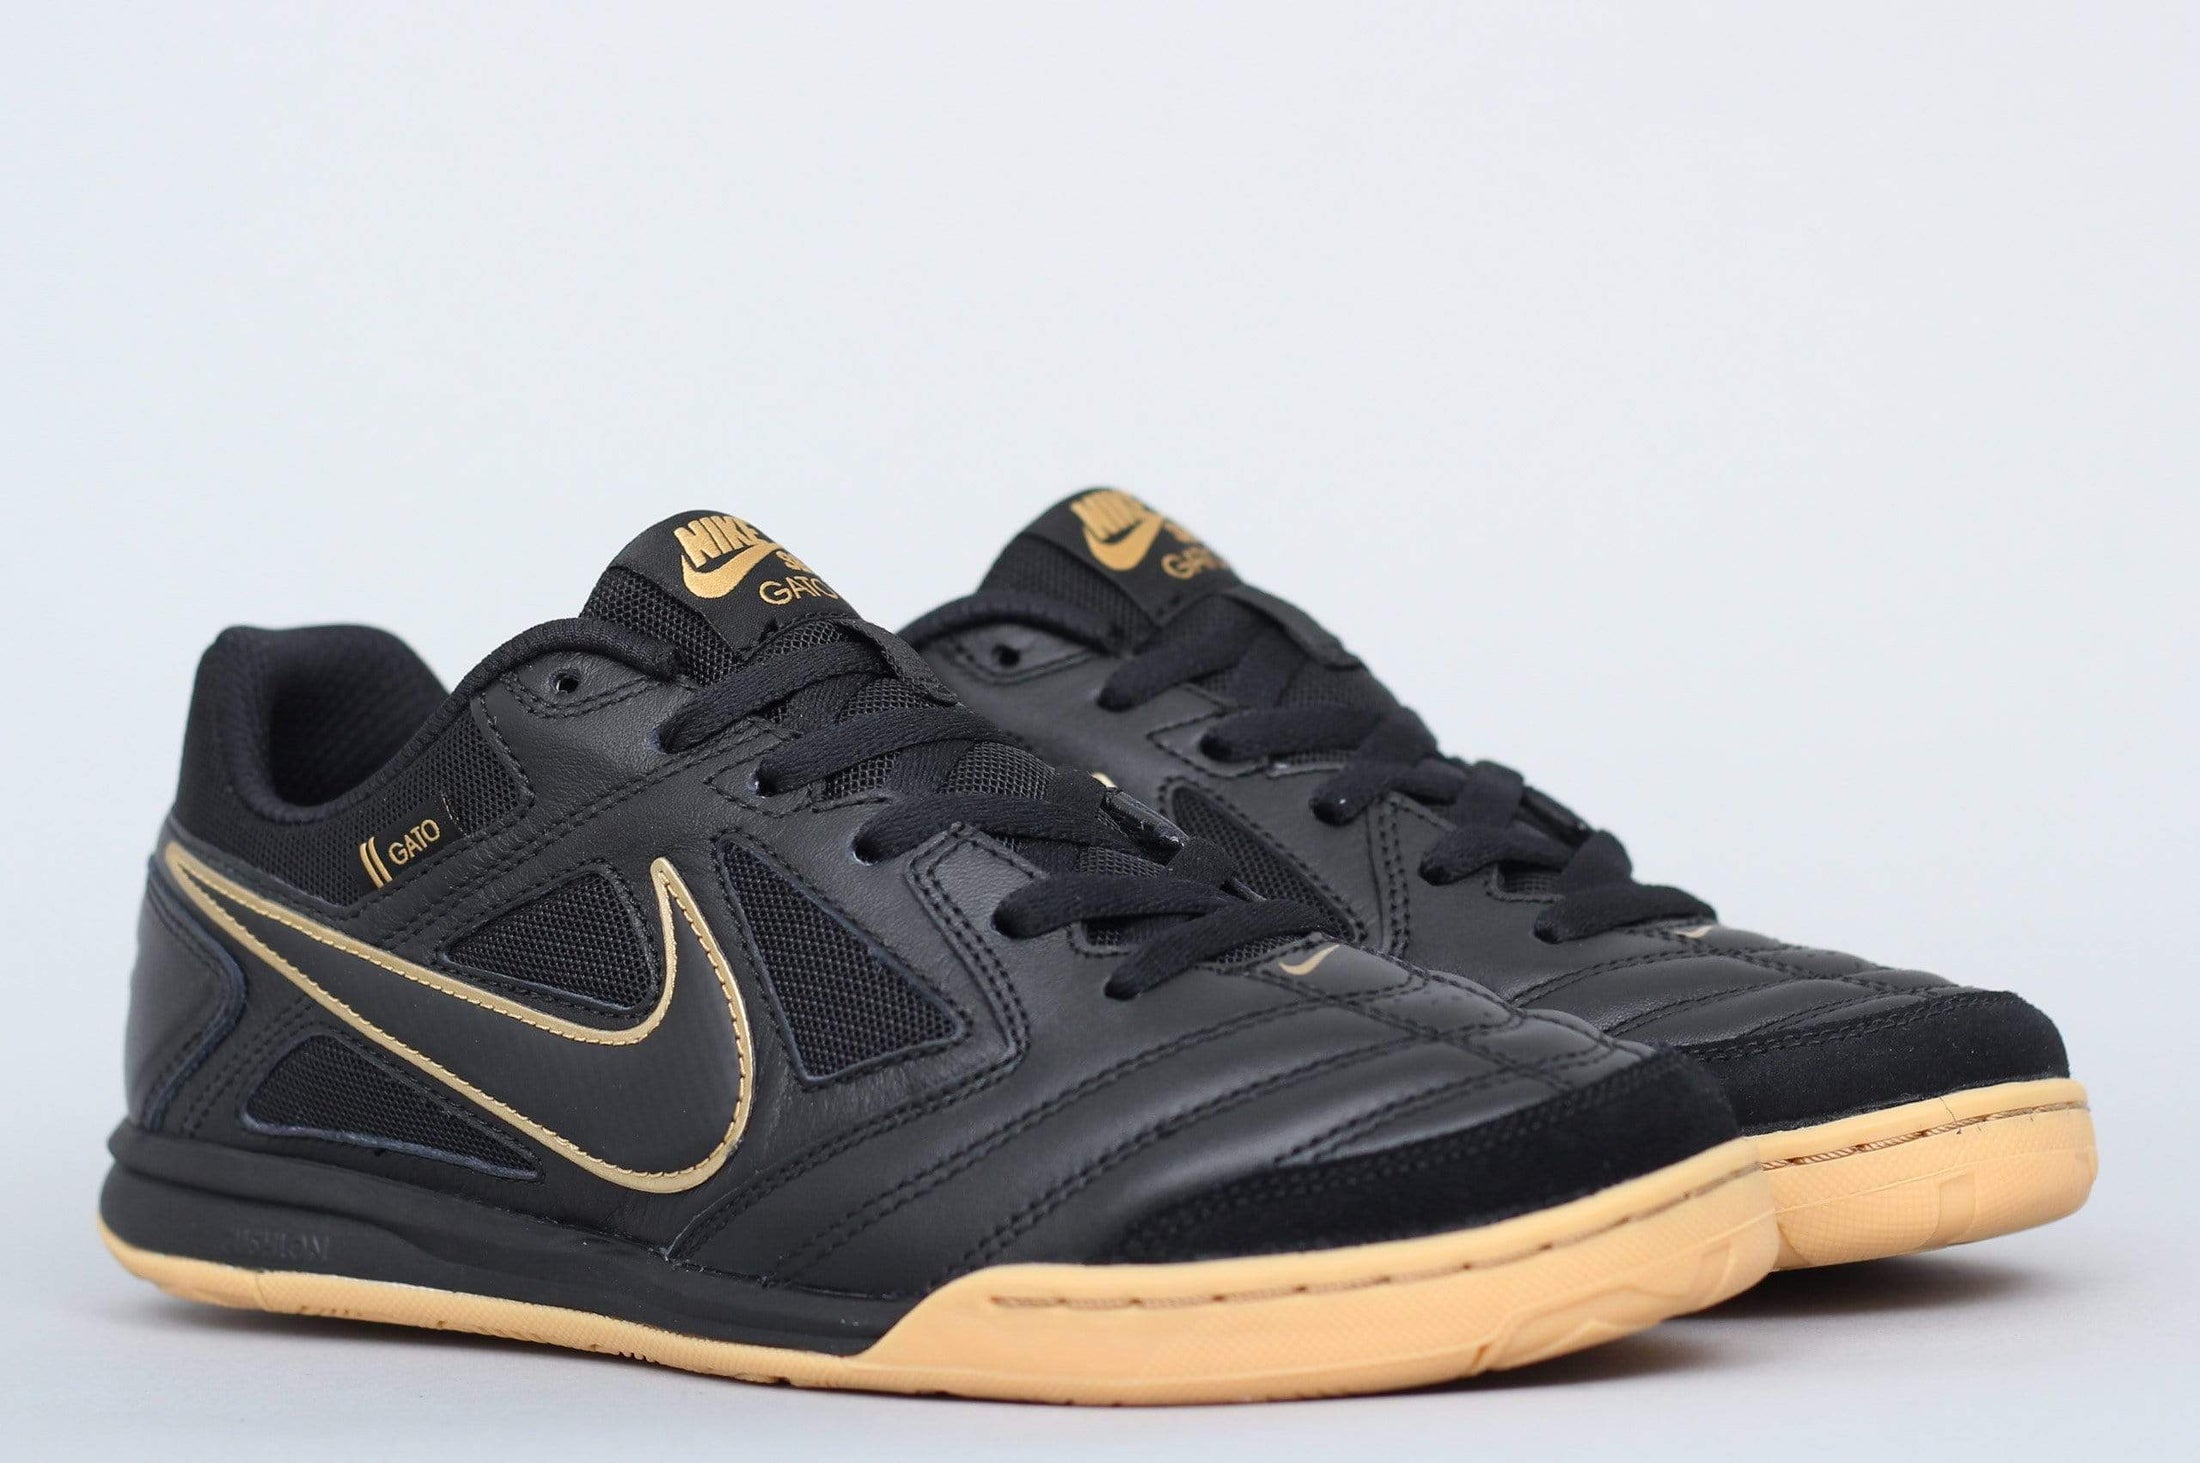 Nike SB Gato Shoes Black / Black - Metallic Gold